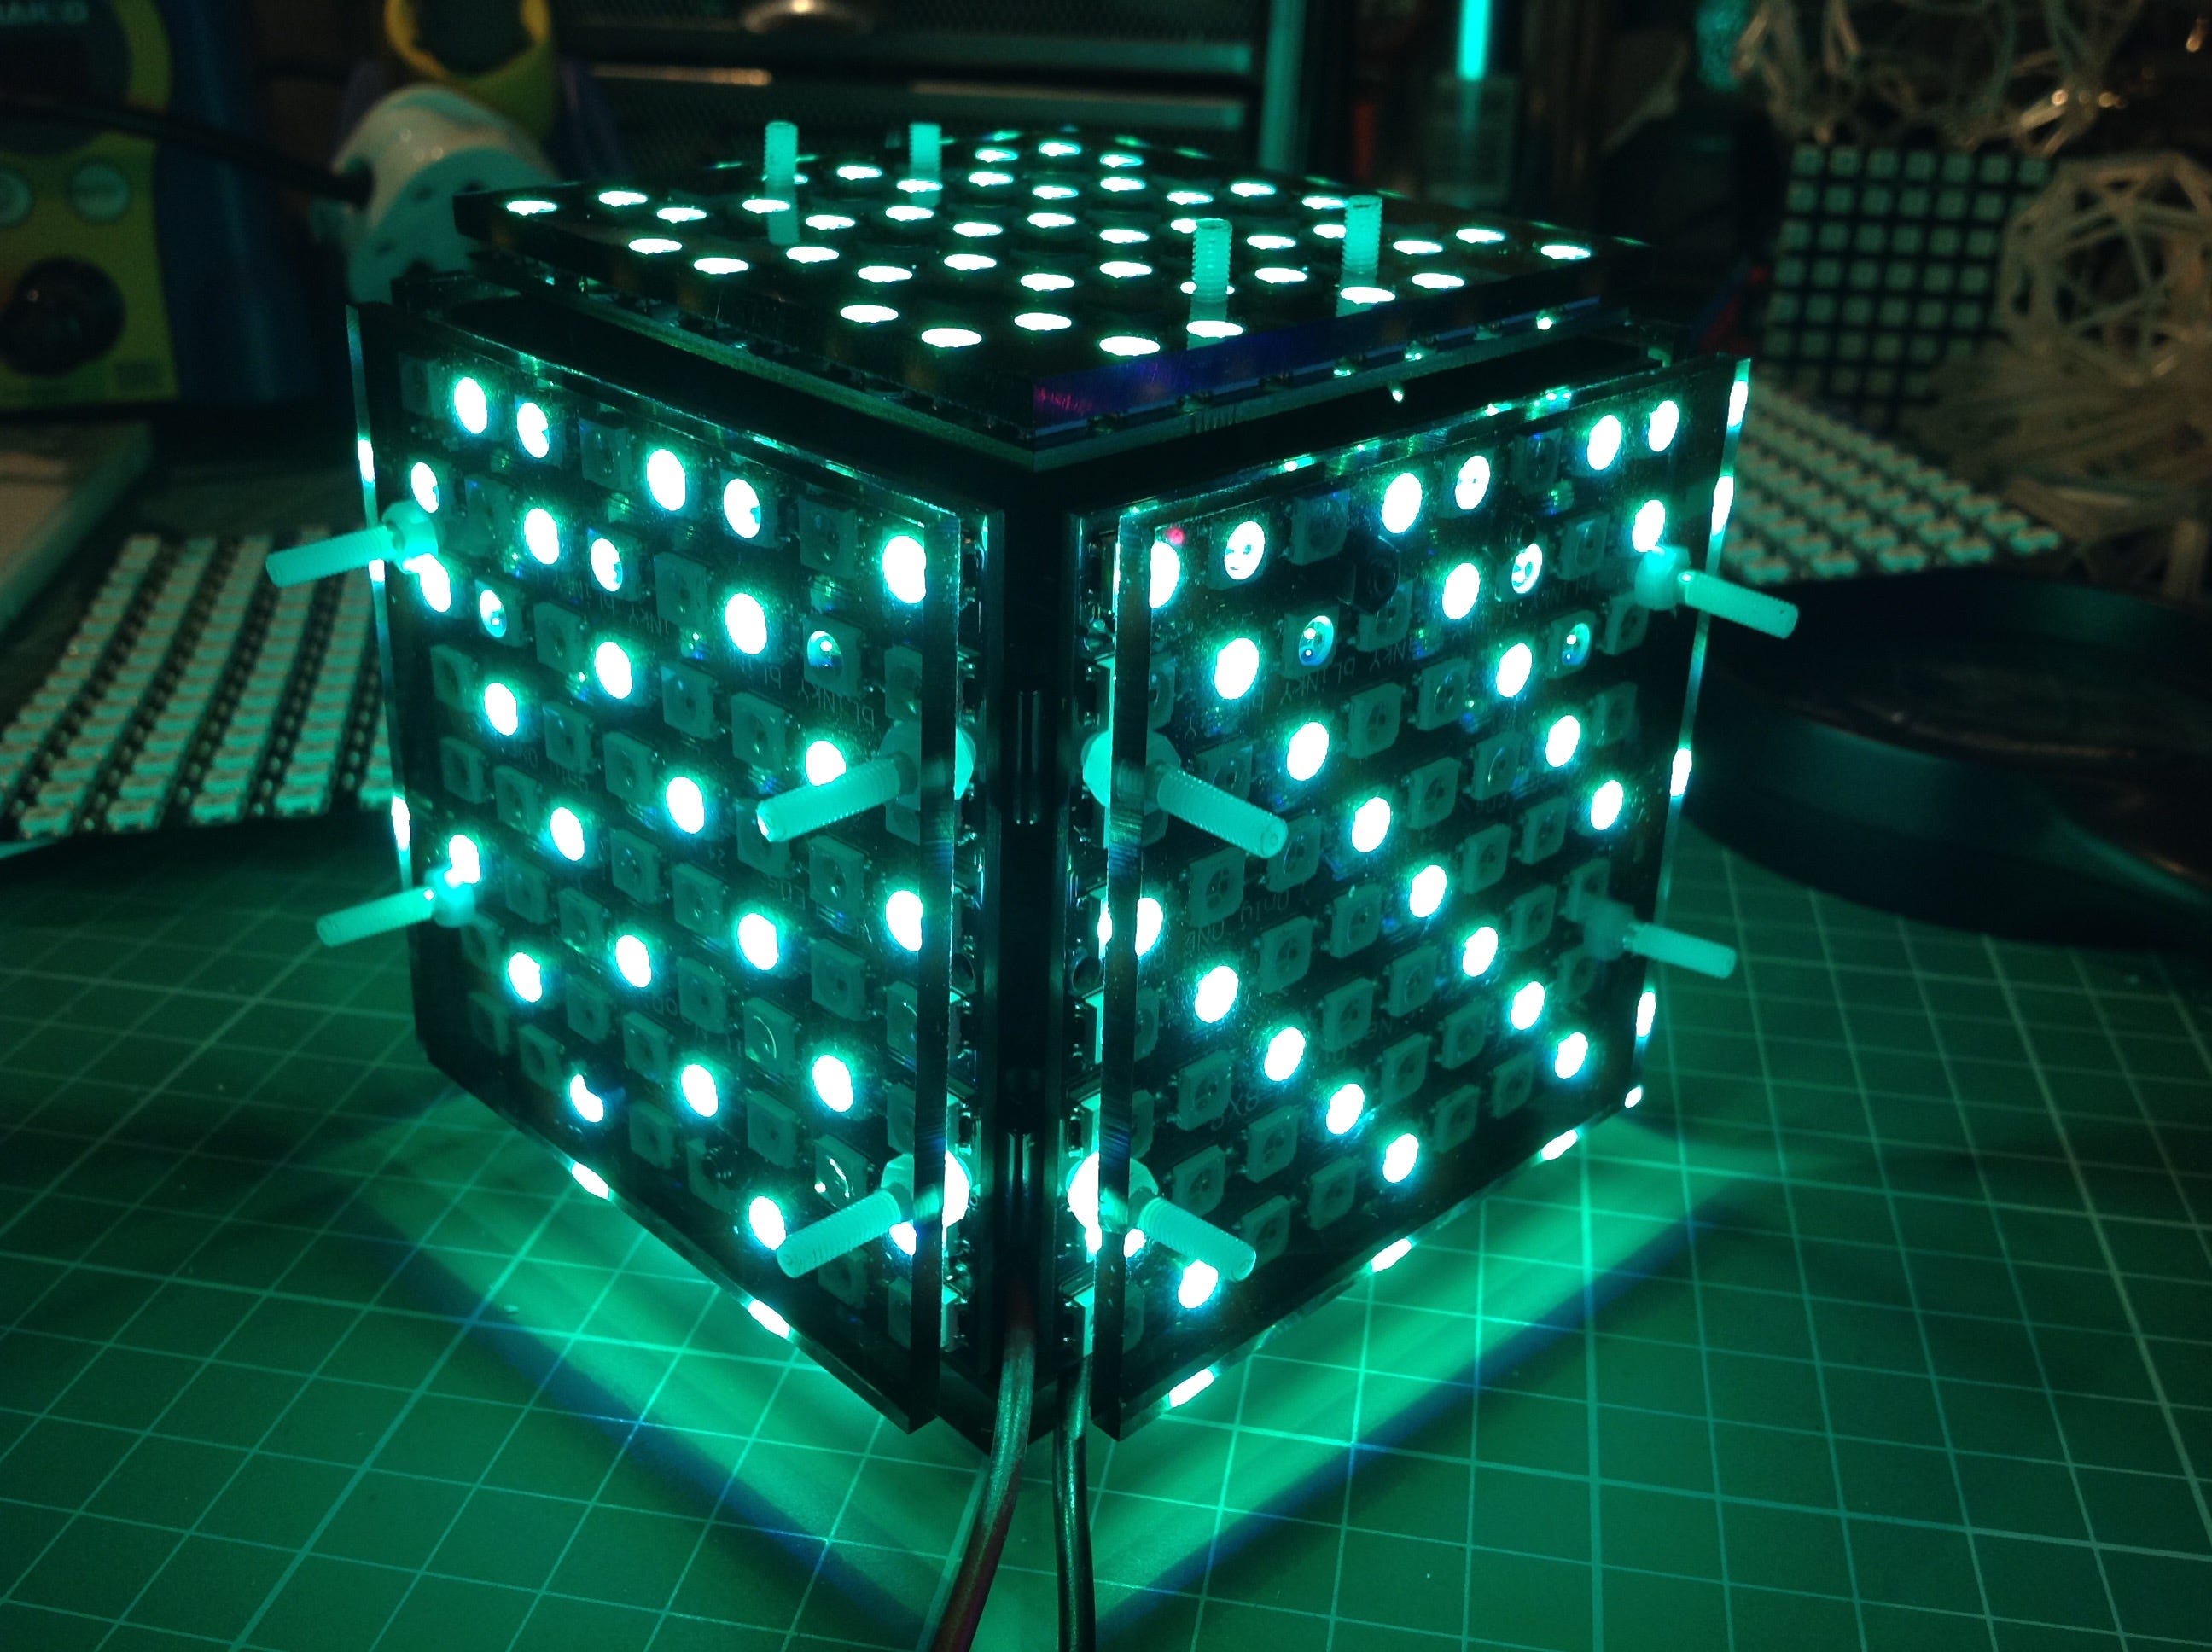 Cube en Plexiglas